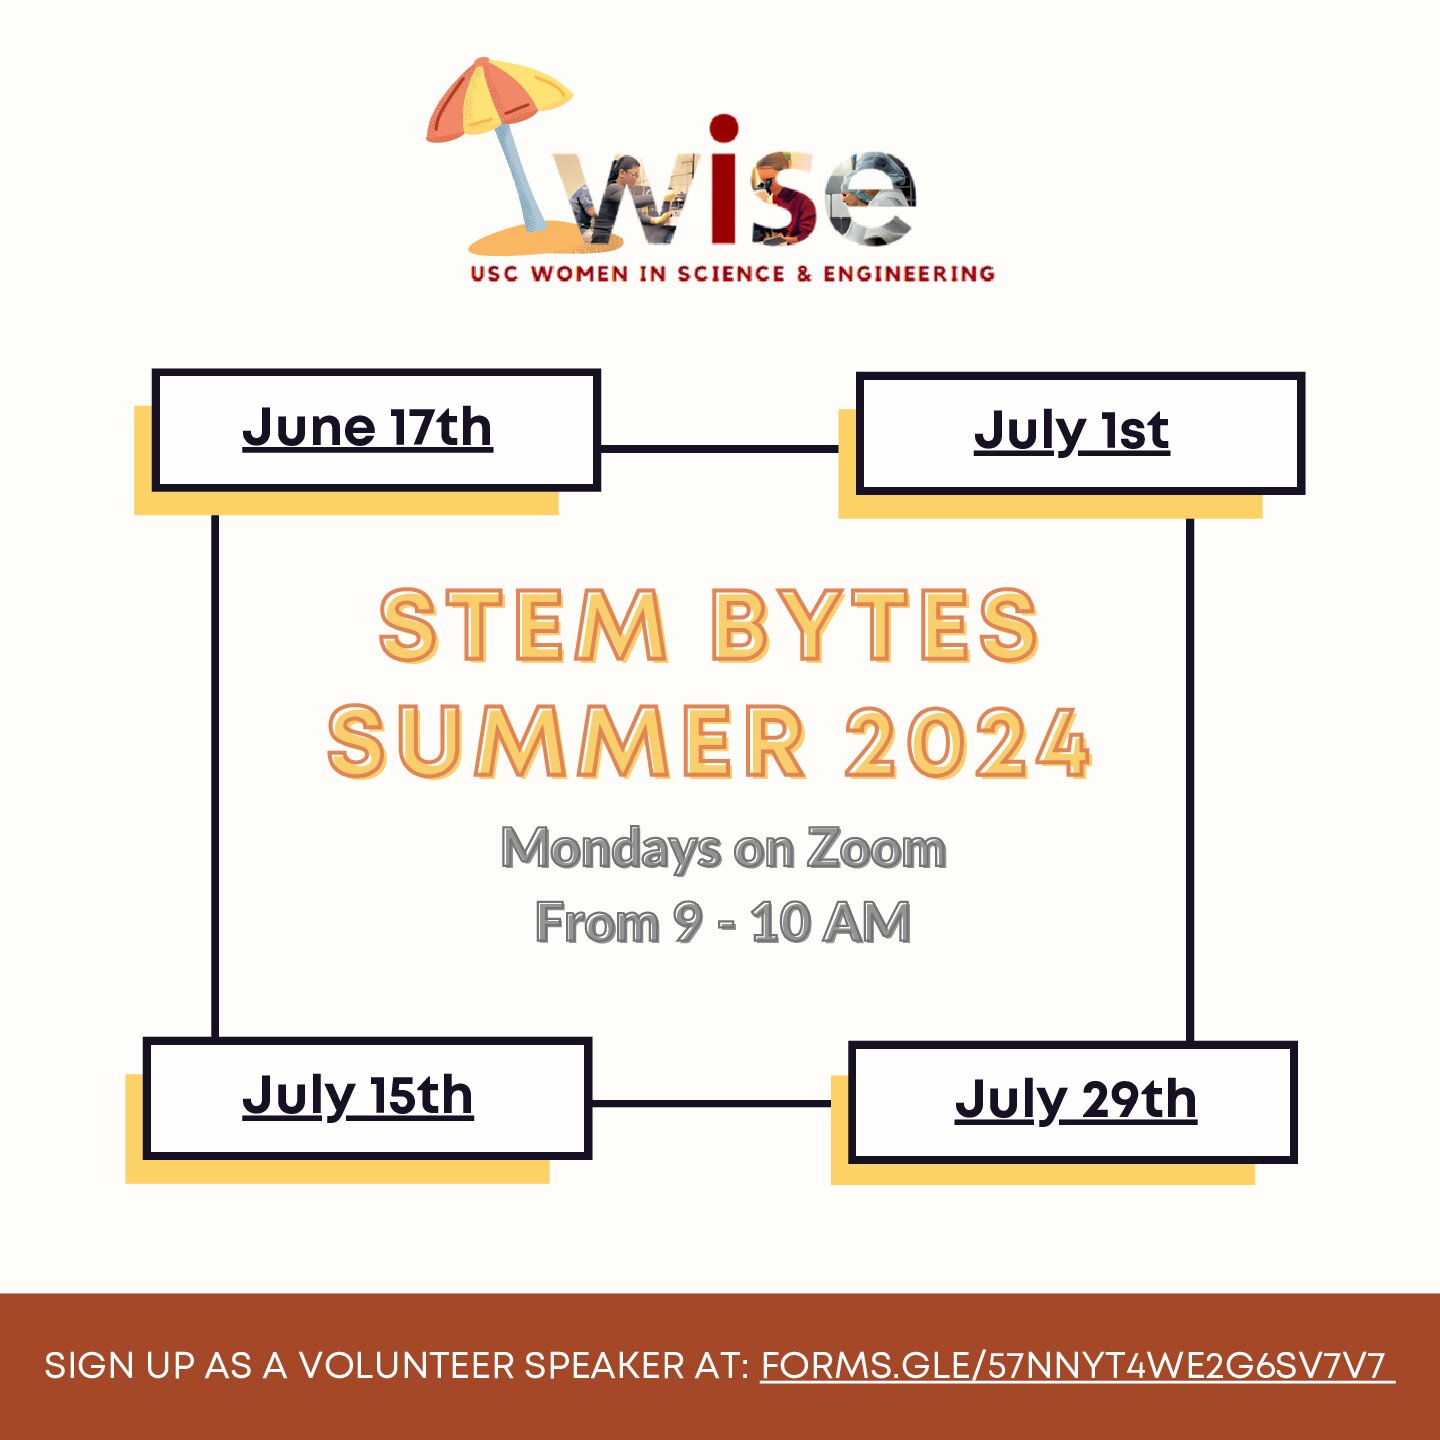 Featured image for “[PhD] Volunteer Speakers Needed For STEM Bytes Seminar Summer 2024”